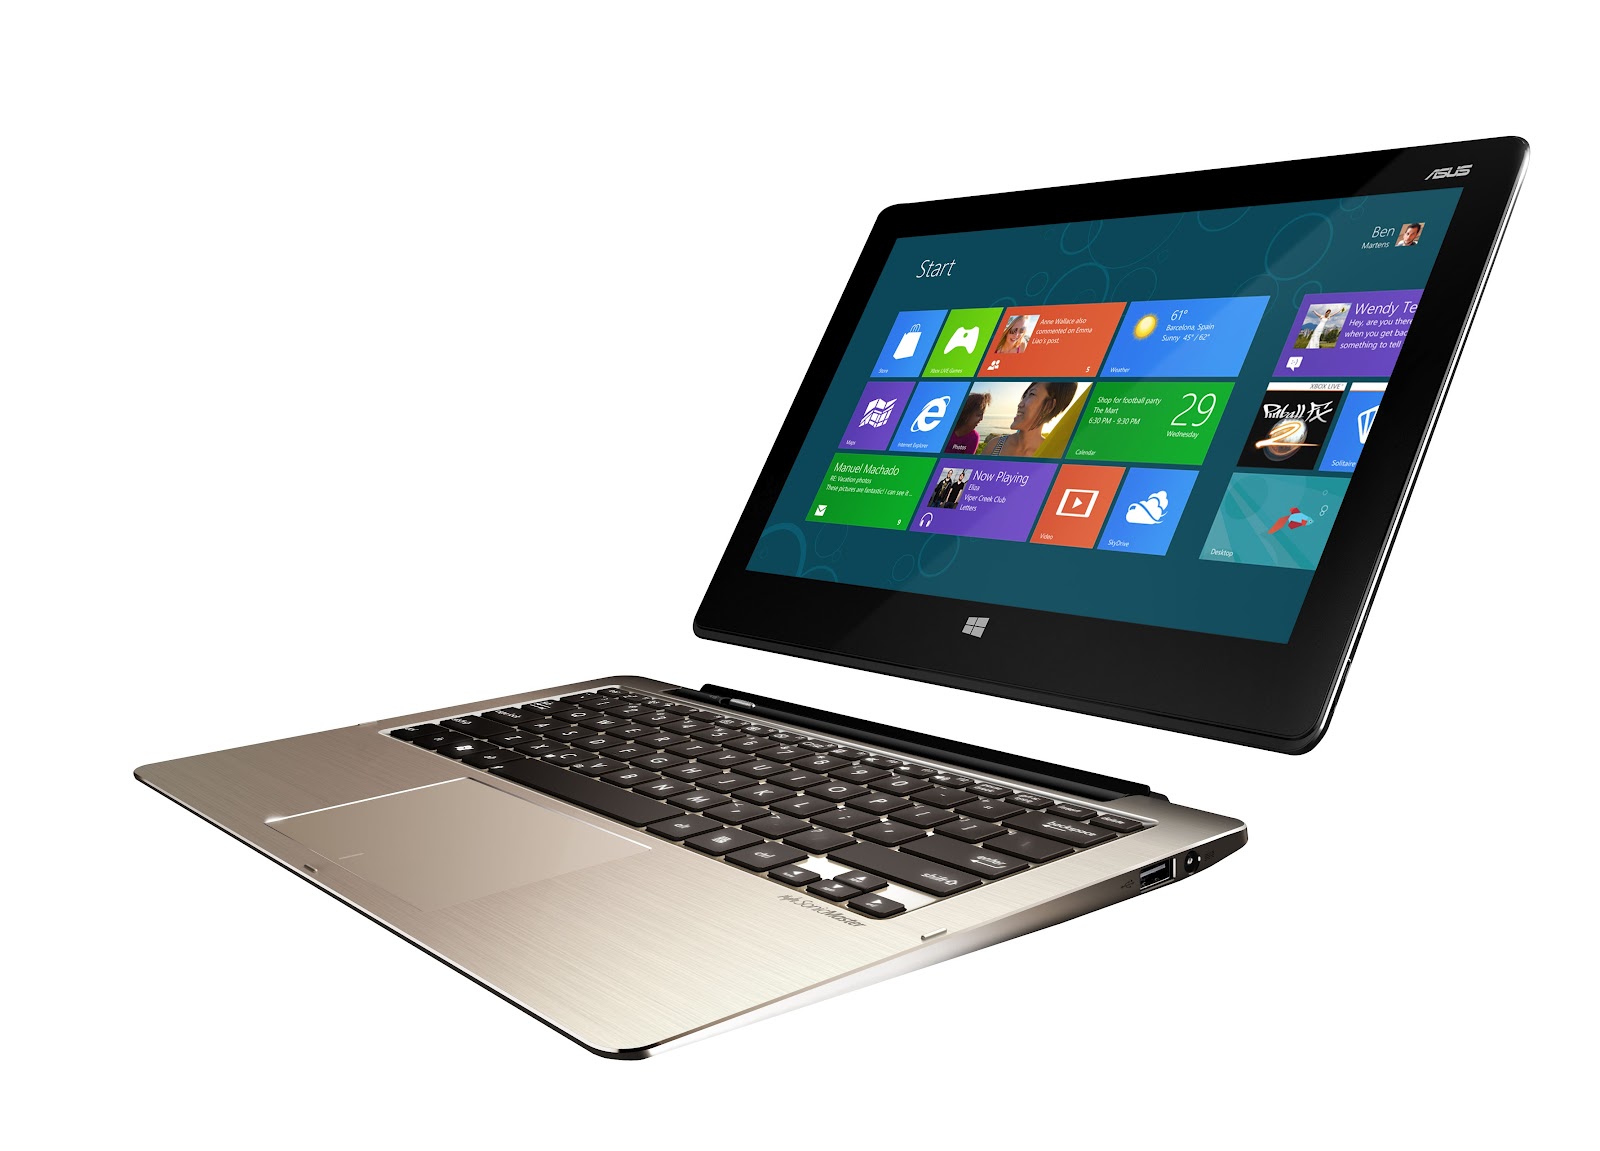 asus tablet 810 windows 8 asus tablet 810 full tablet specifications ...